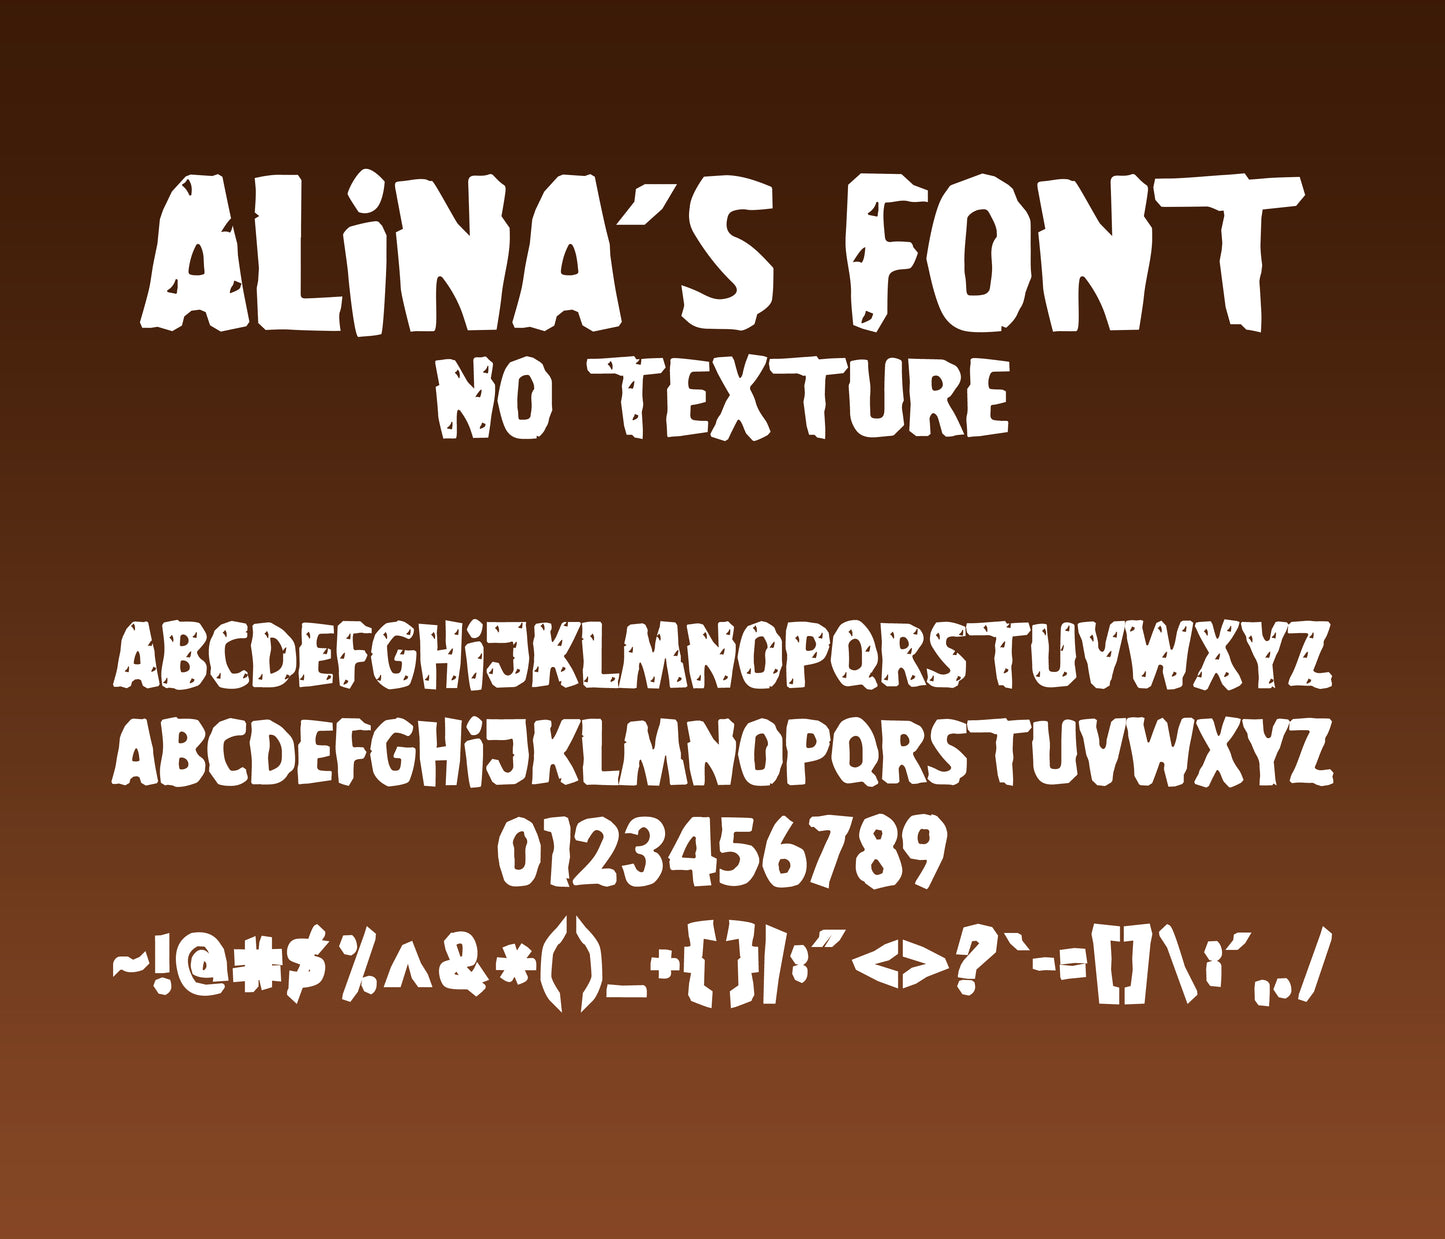 Flintstones Color Textured Font